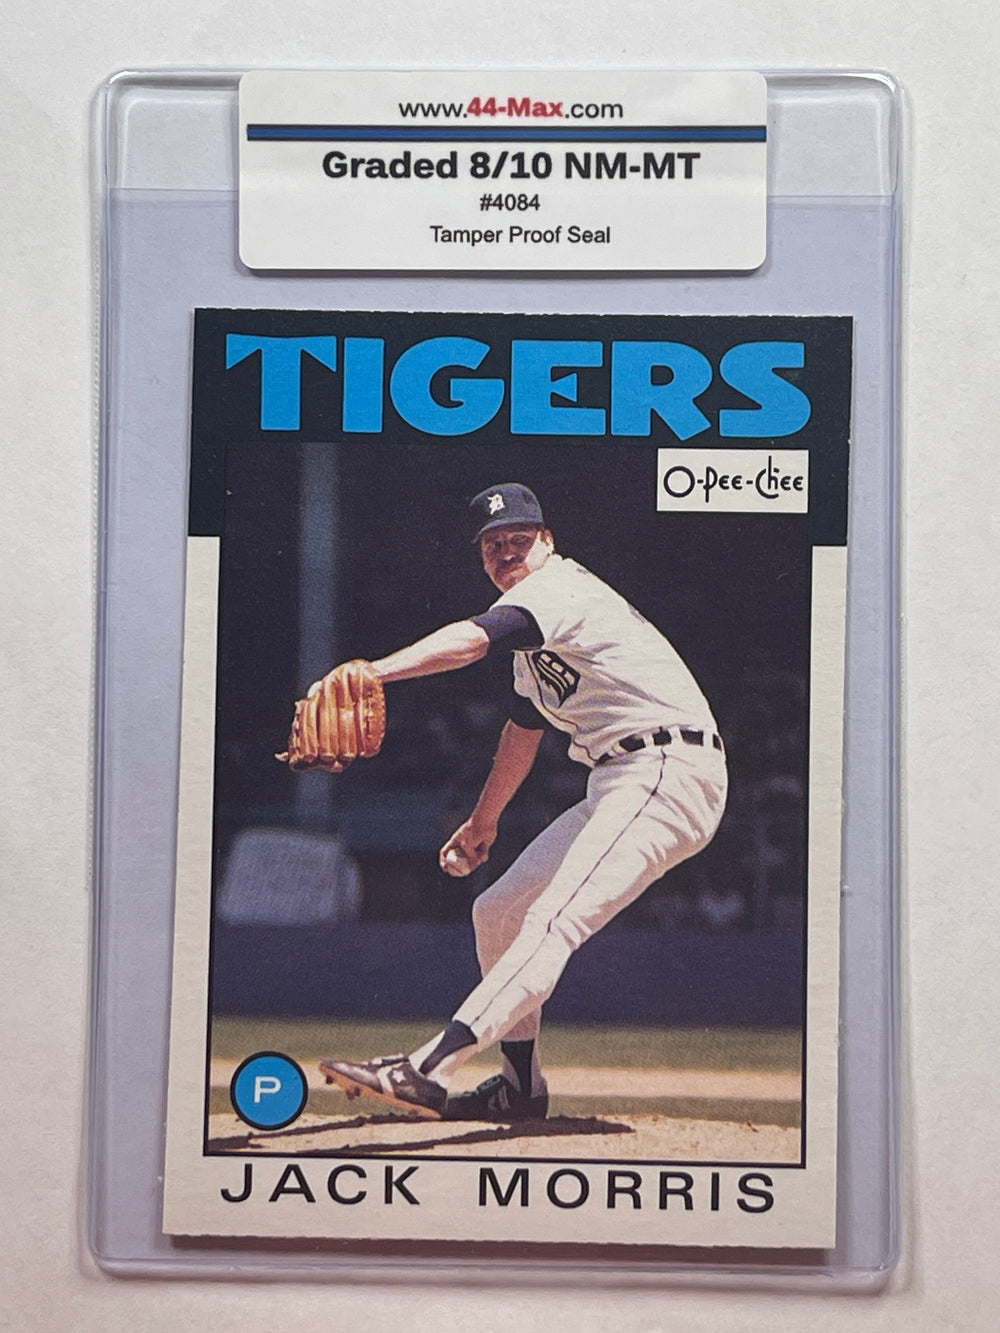 Jack Morris 1986 O-Pee-Chee Baseball Card. 44-Max 8/10 NM-MT #4084